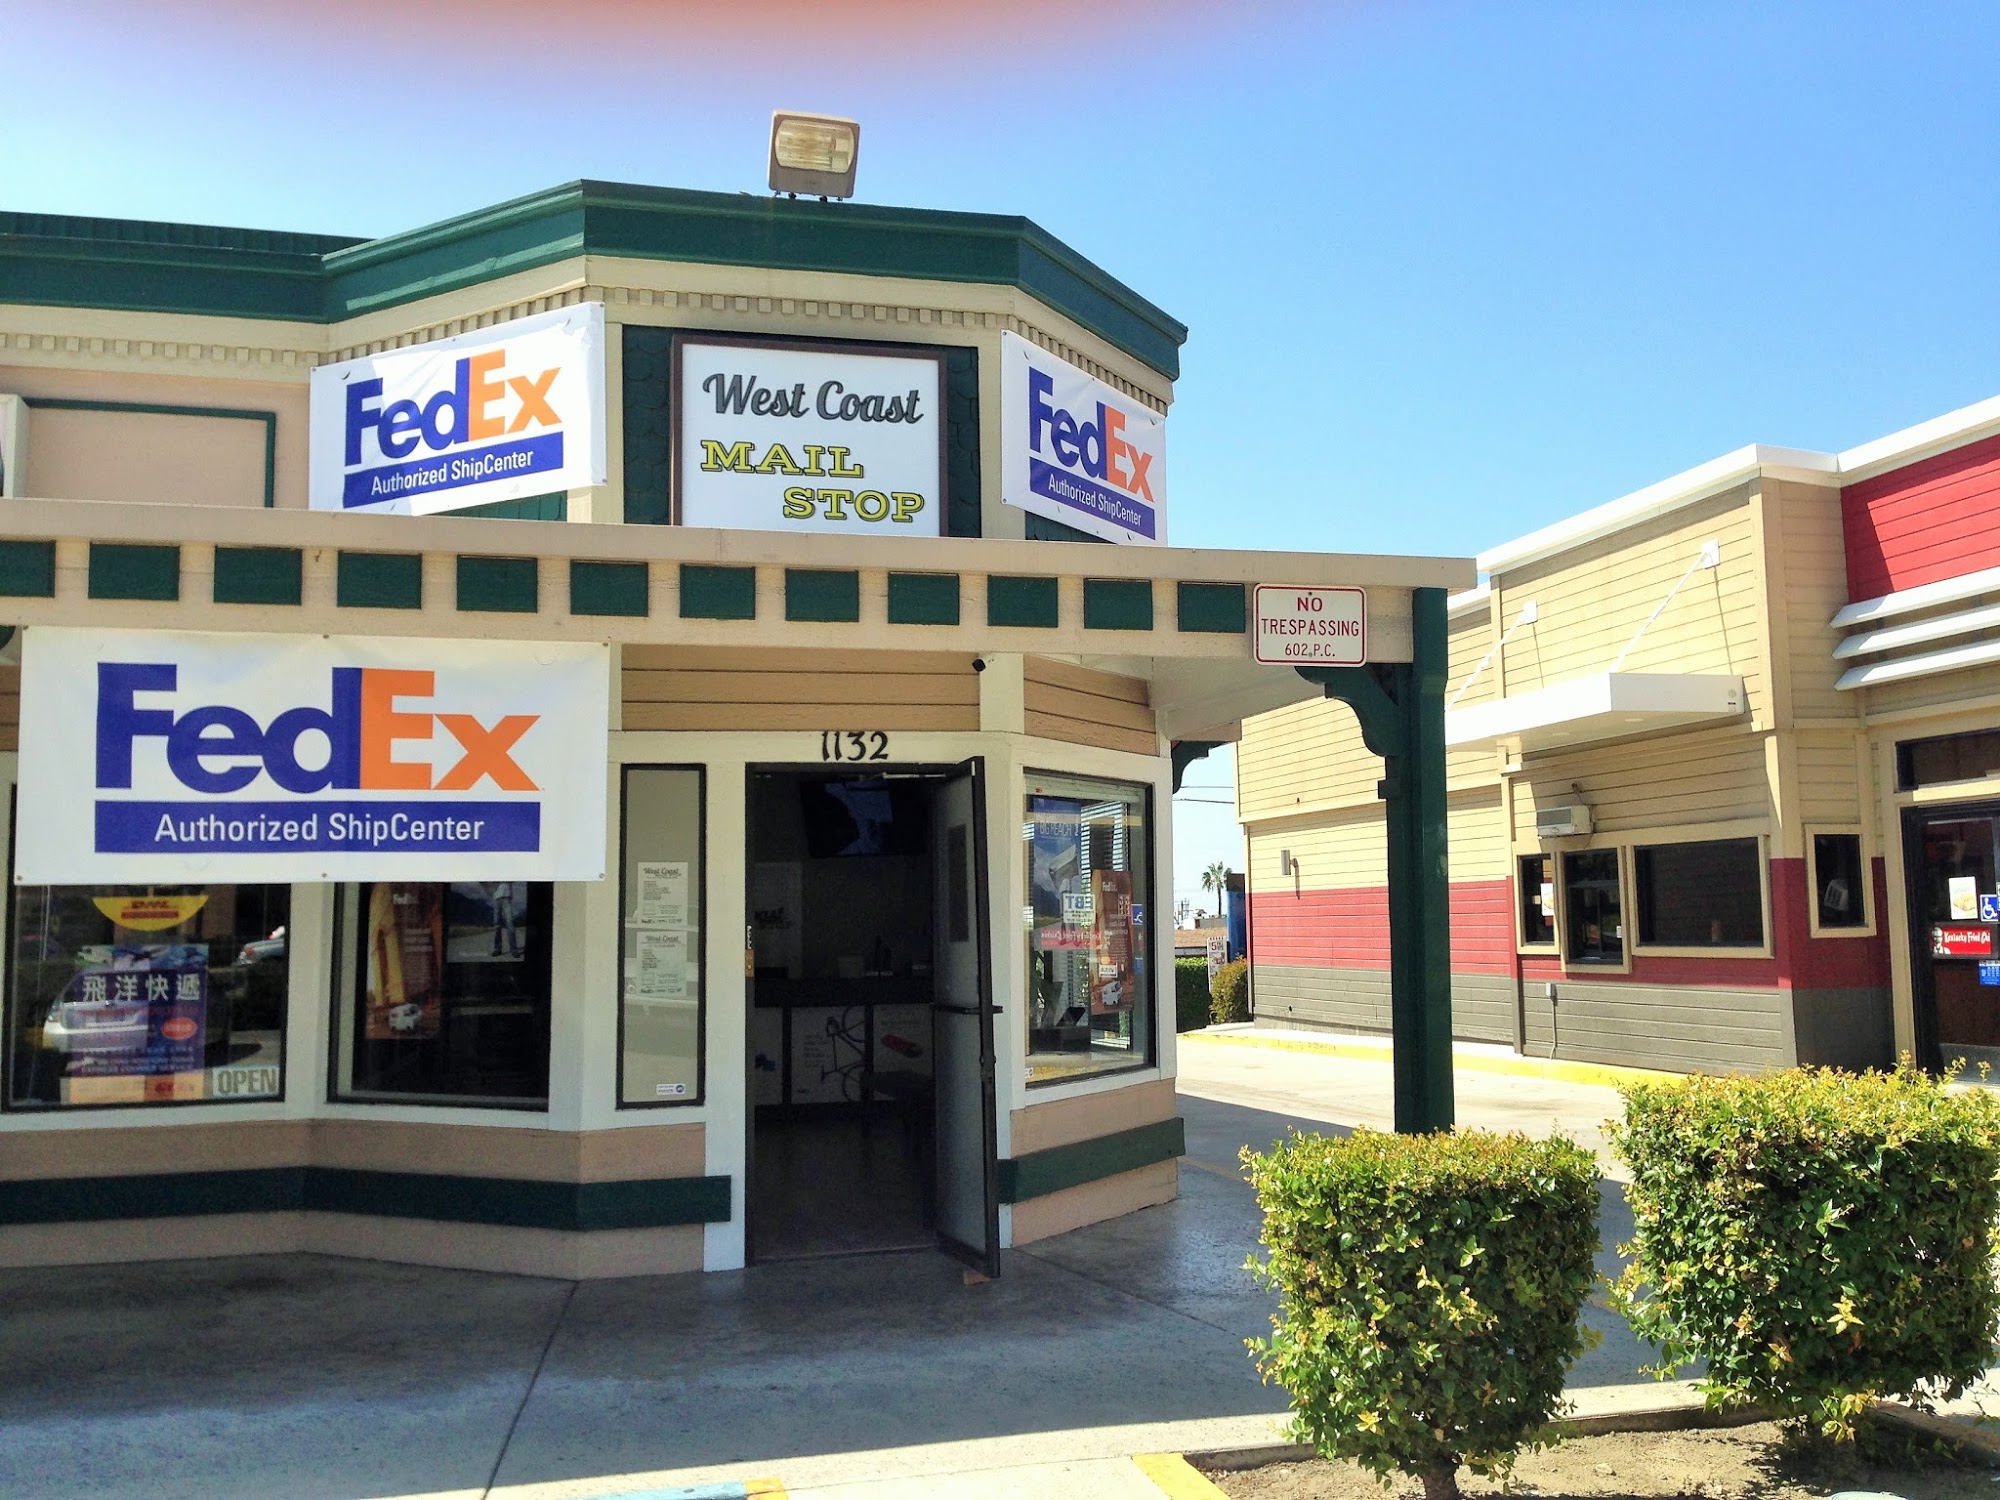 Fedex West Coast Mail Stop